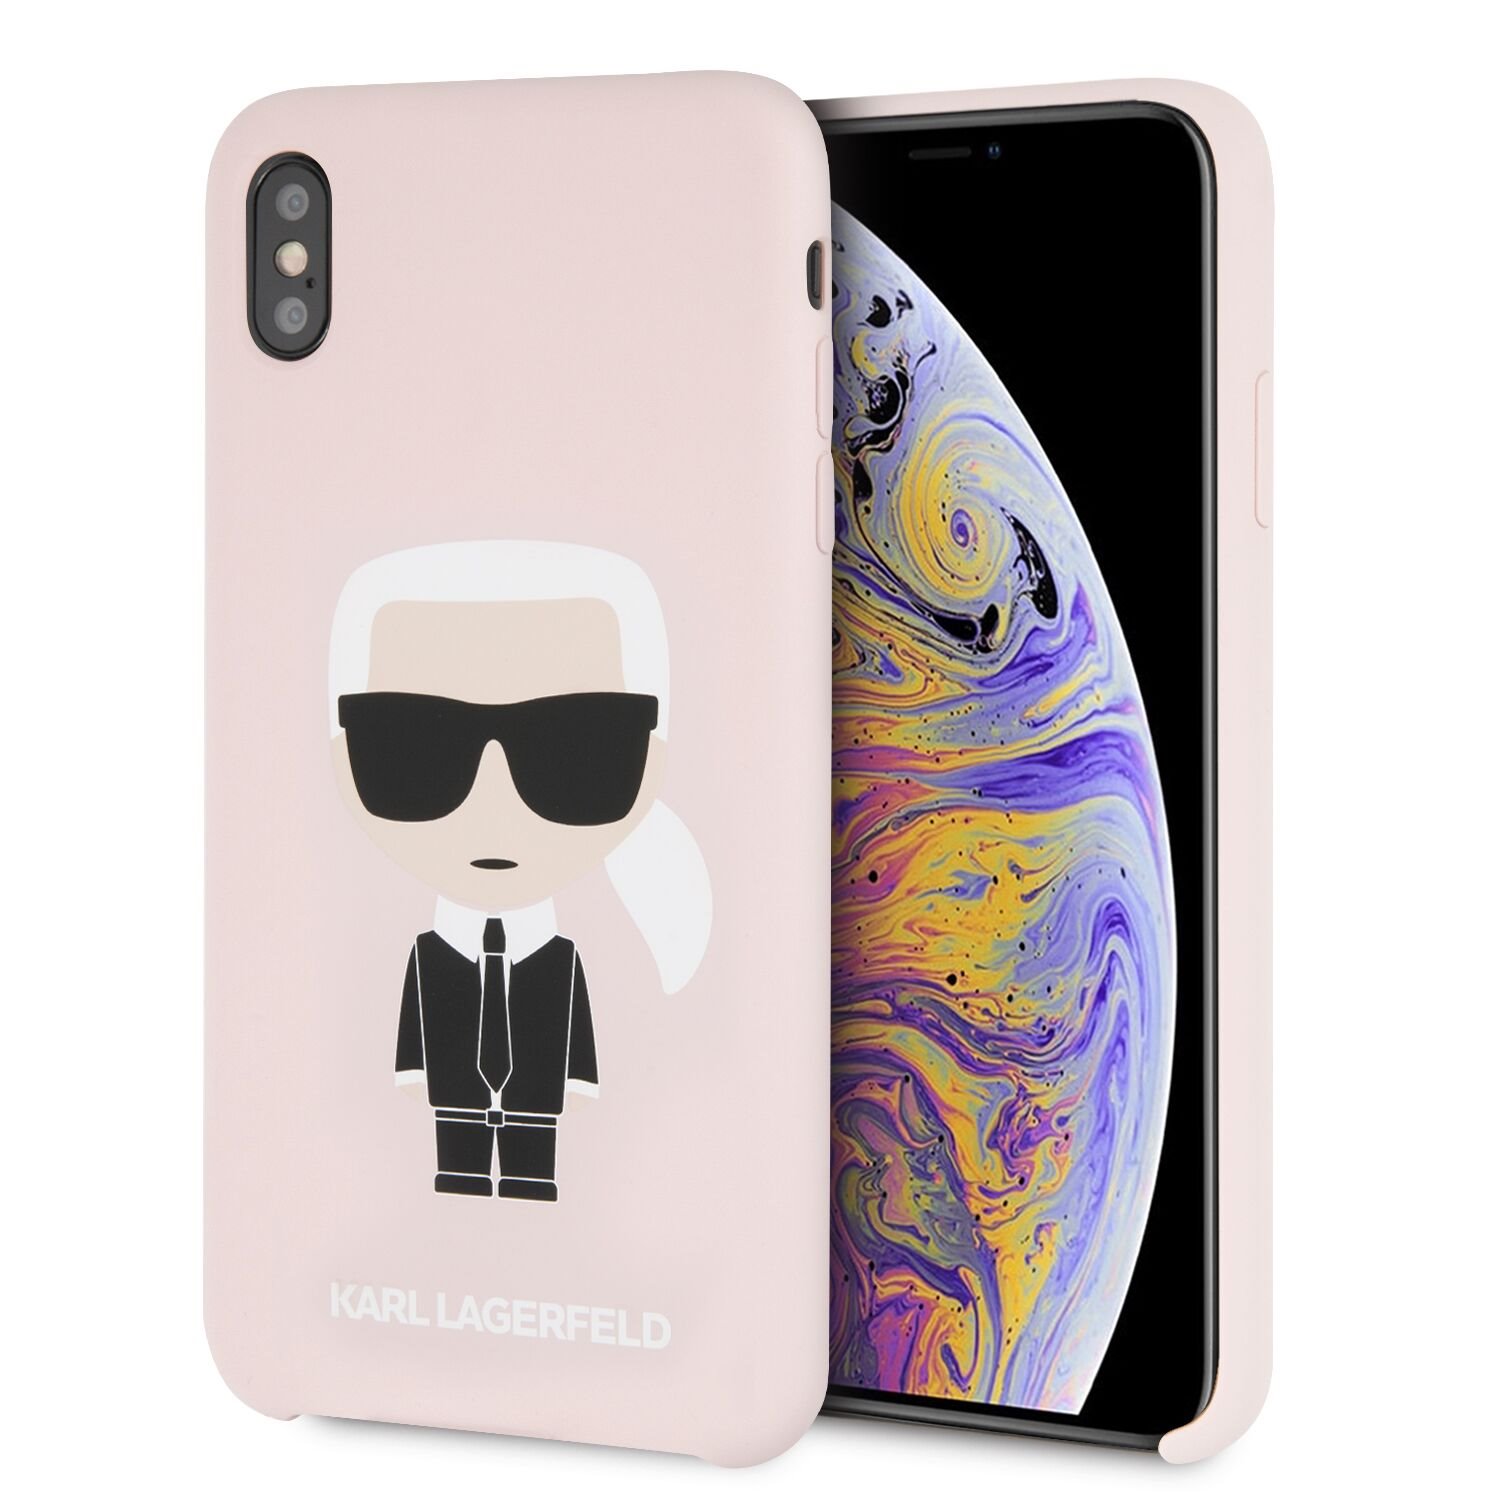 Silikónové puzdro Karl Lagerfeld Body Iconic Apple iPhone XS Max, pink